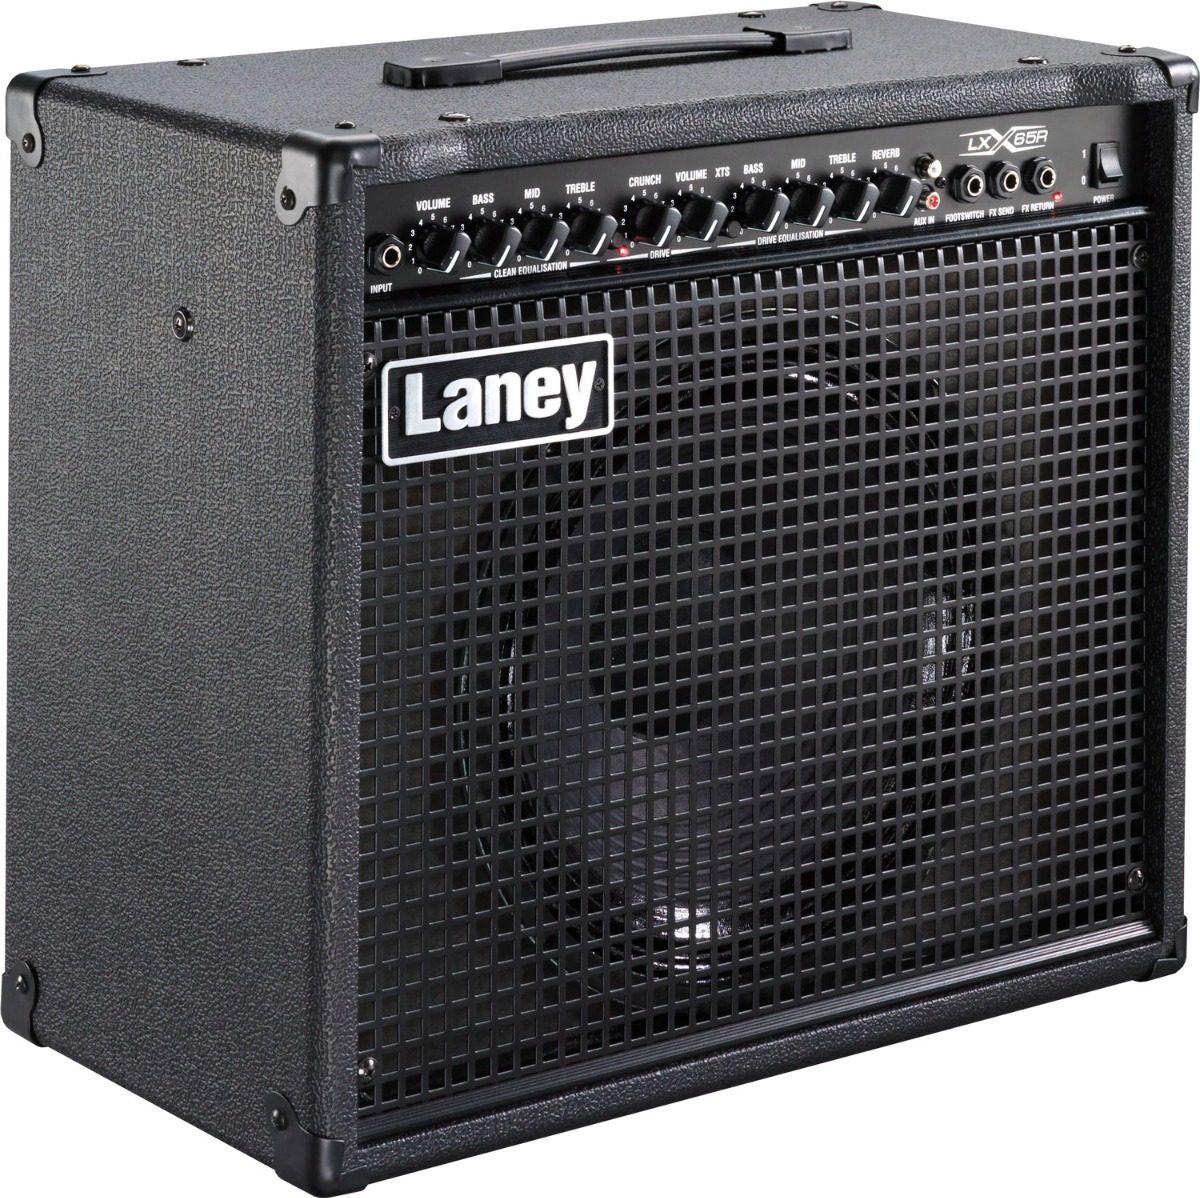 Laney - Combo Guitarra Eléctrica Extreme, 65W 1x12 Mod.LX65R_120